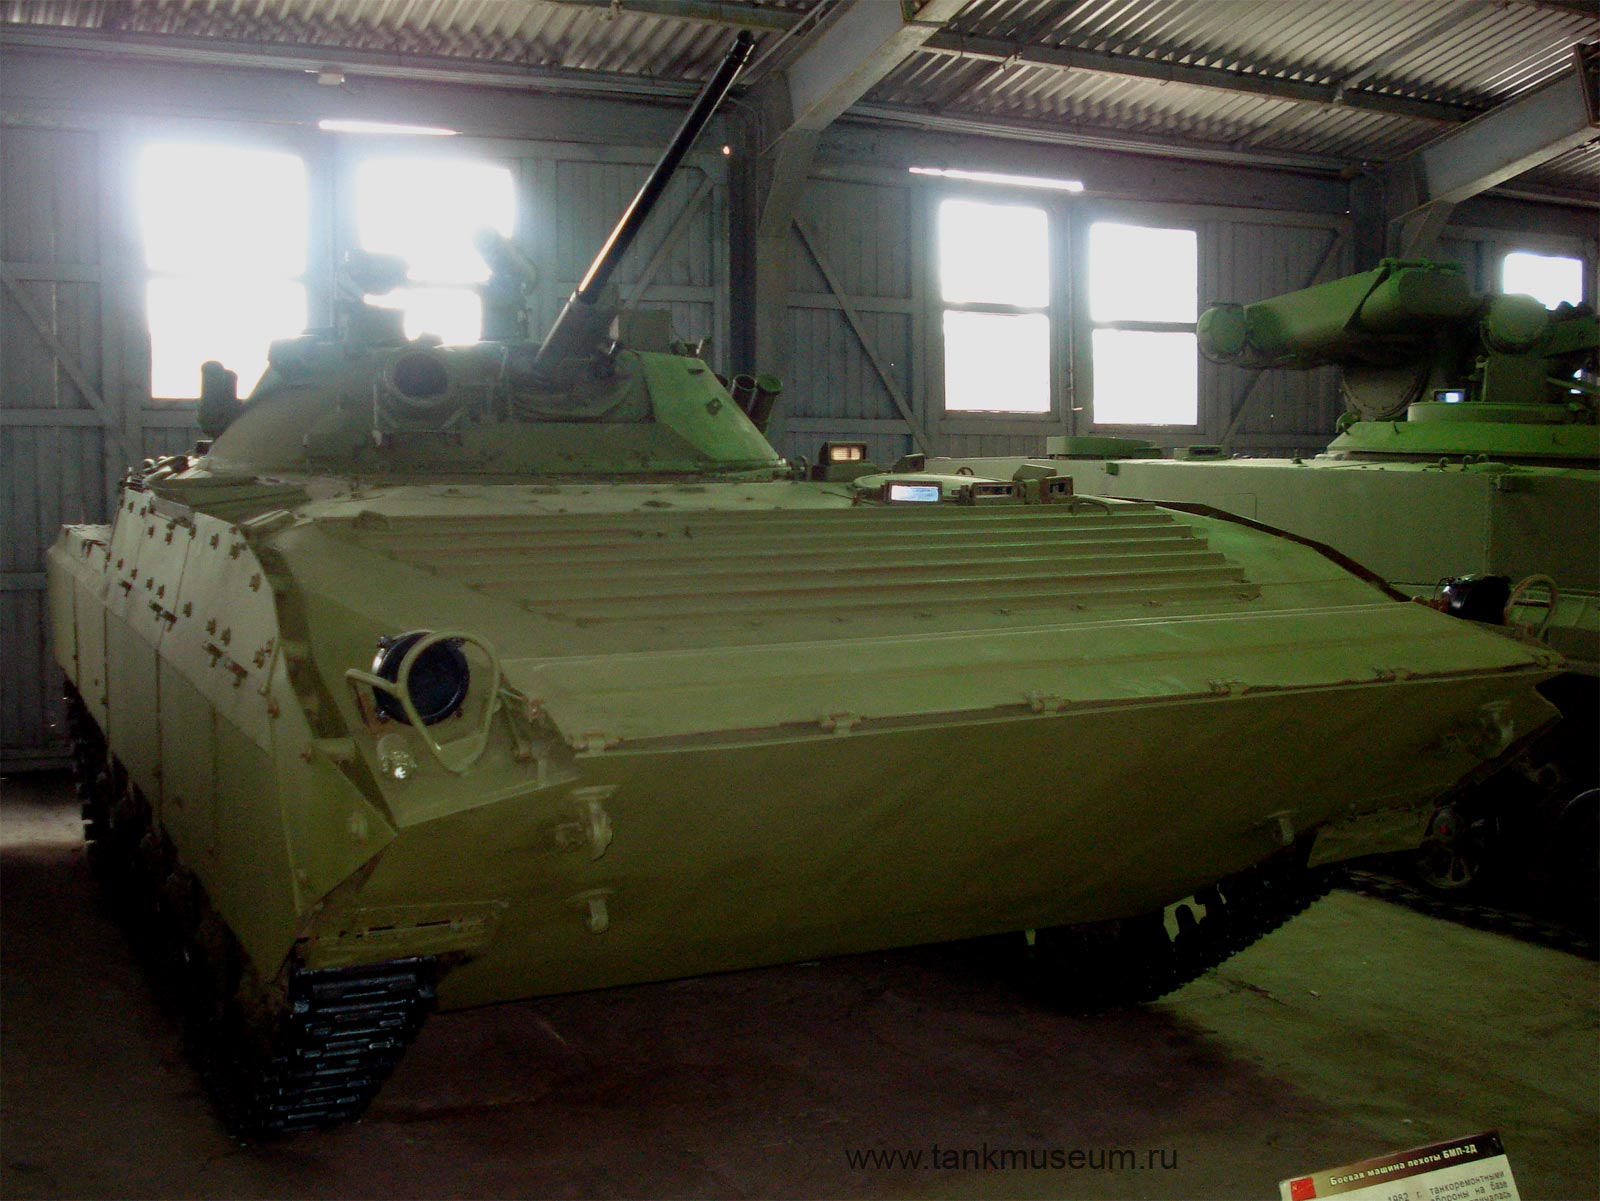 Kubinka tank museum BMP-2D infantry fighting vehicle